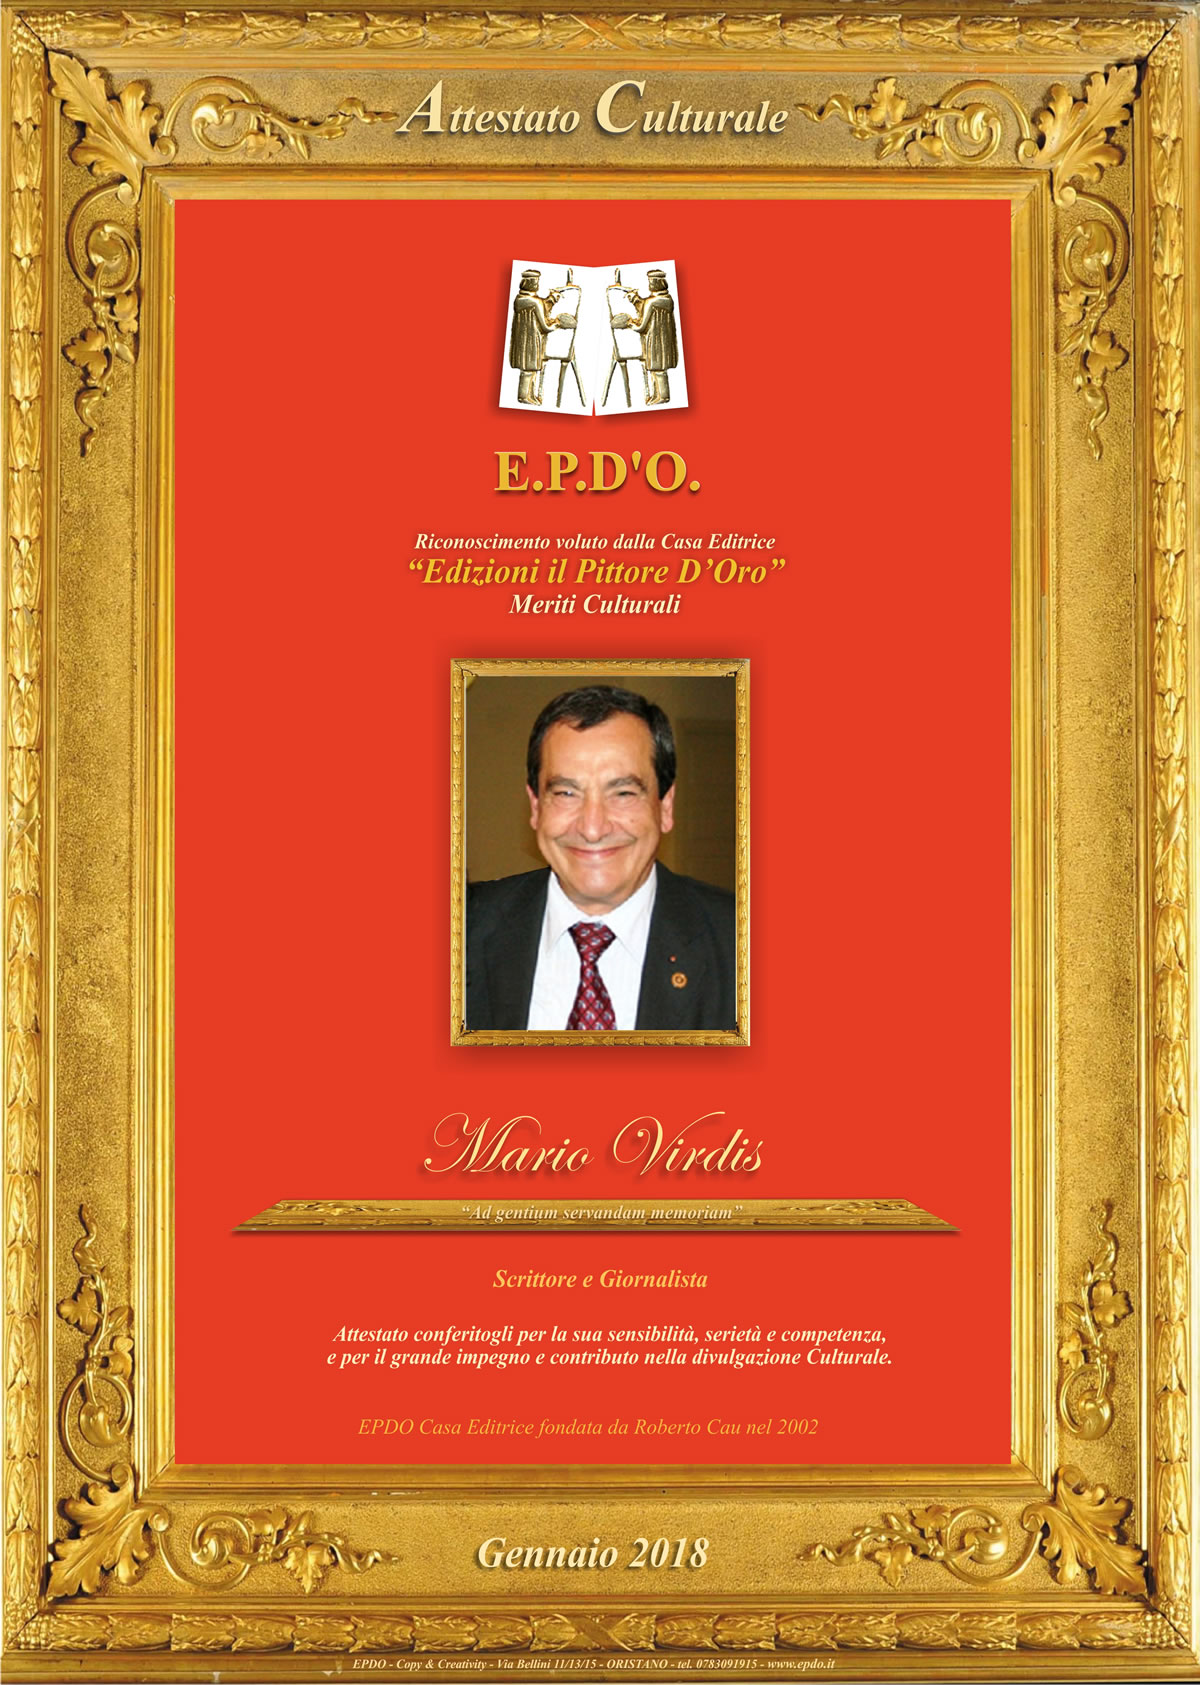 EPDO - Attestato Culturale Mario Virdis